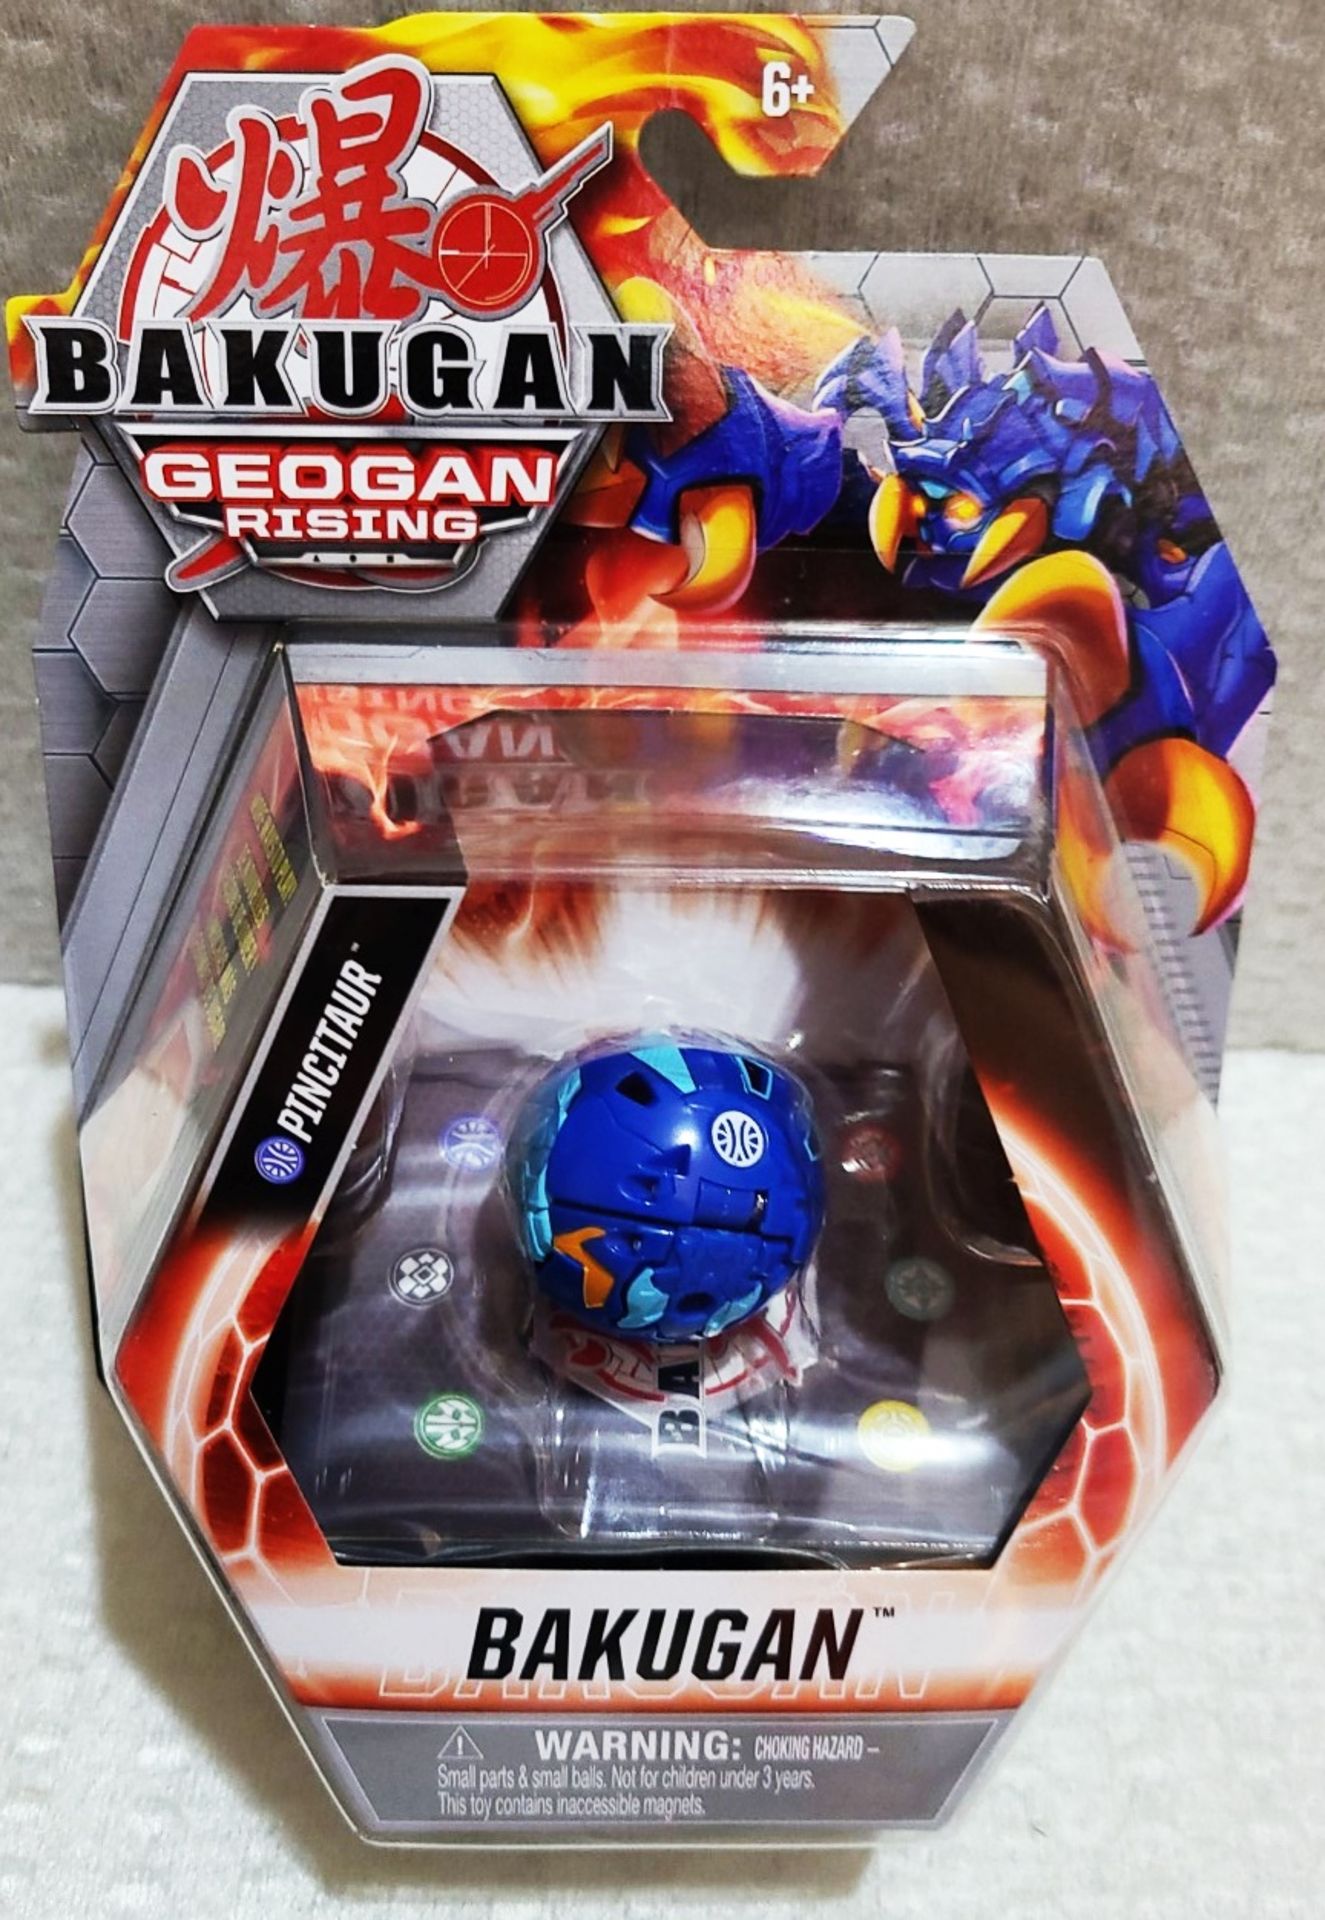 4 x BAKUGAN Bakugan Geogan Rising - Core Collectible Action Figures - Image 8 of 8